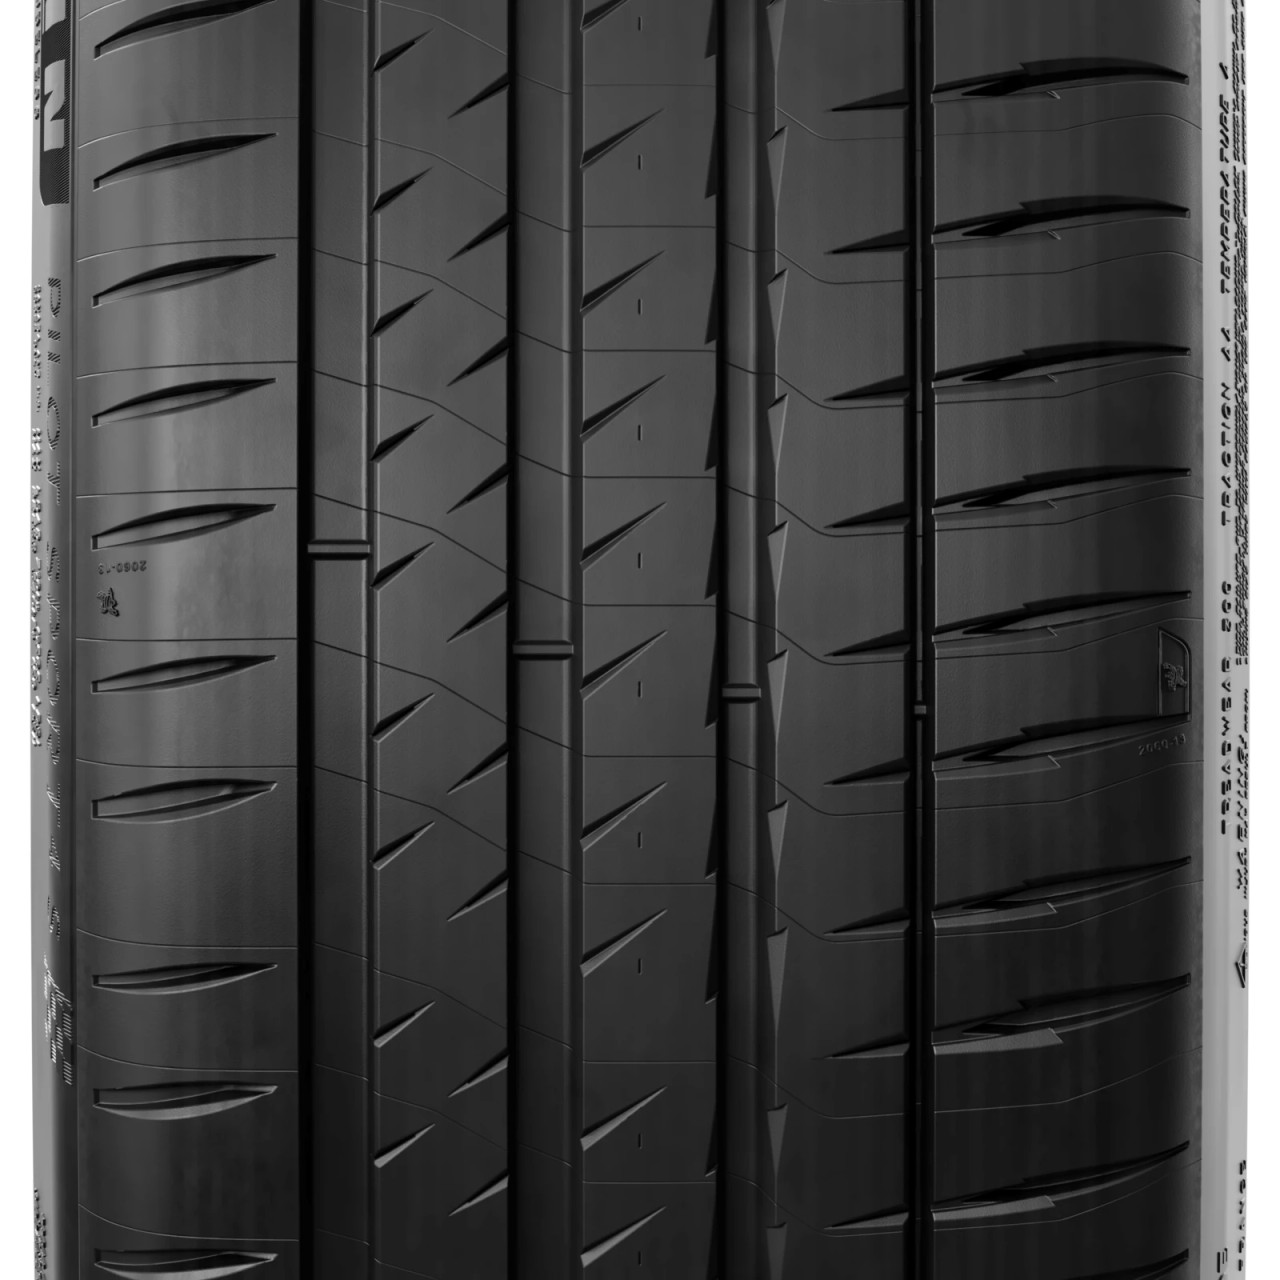 Michelin Pilot Sport 4S 245/40ZR19 (98Y) MO1 Mercedes Tire